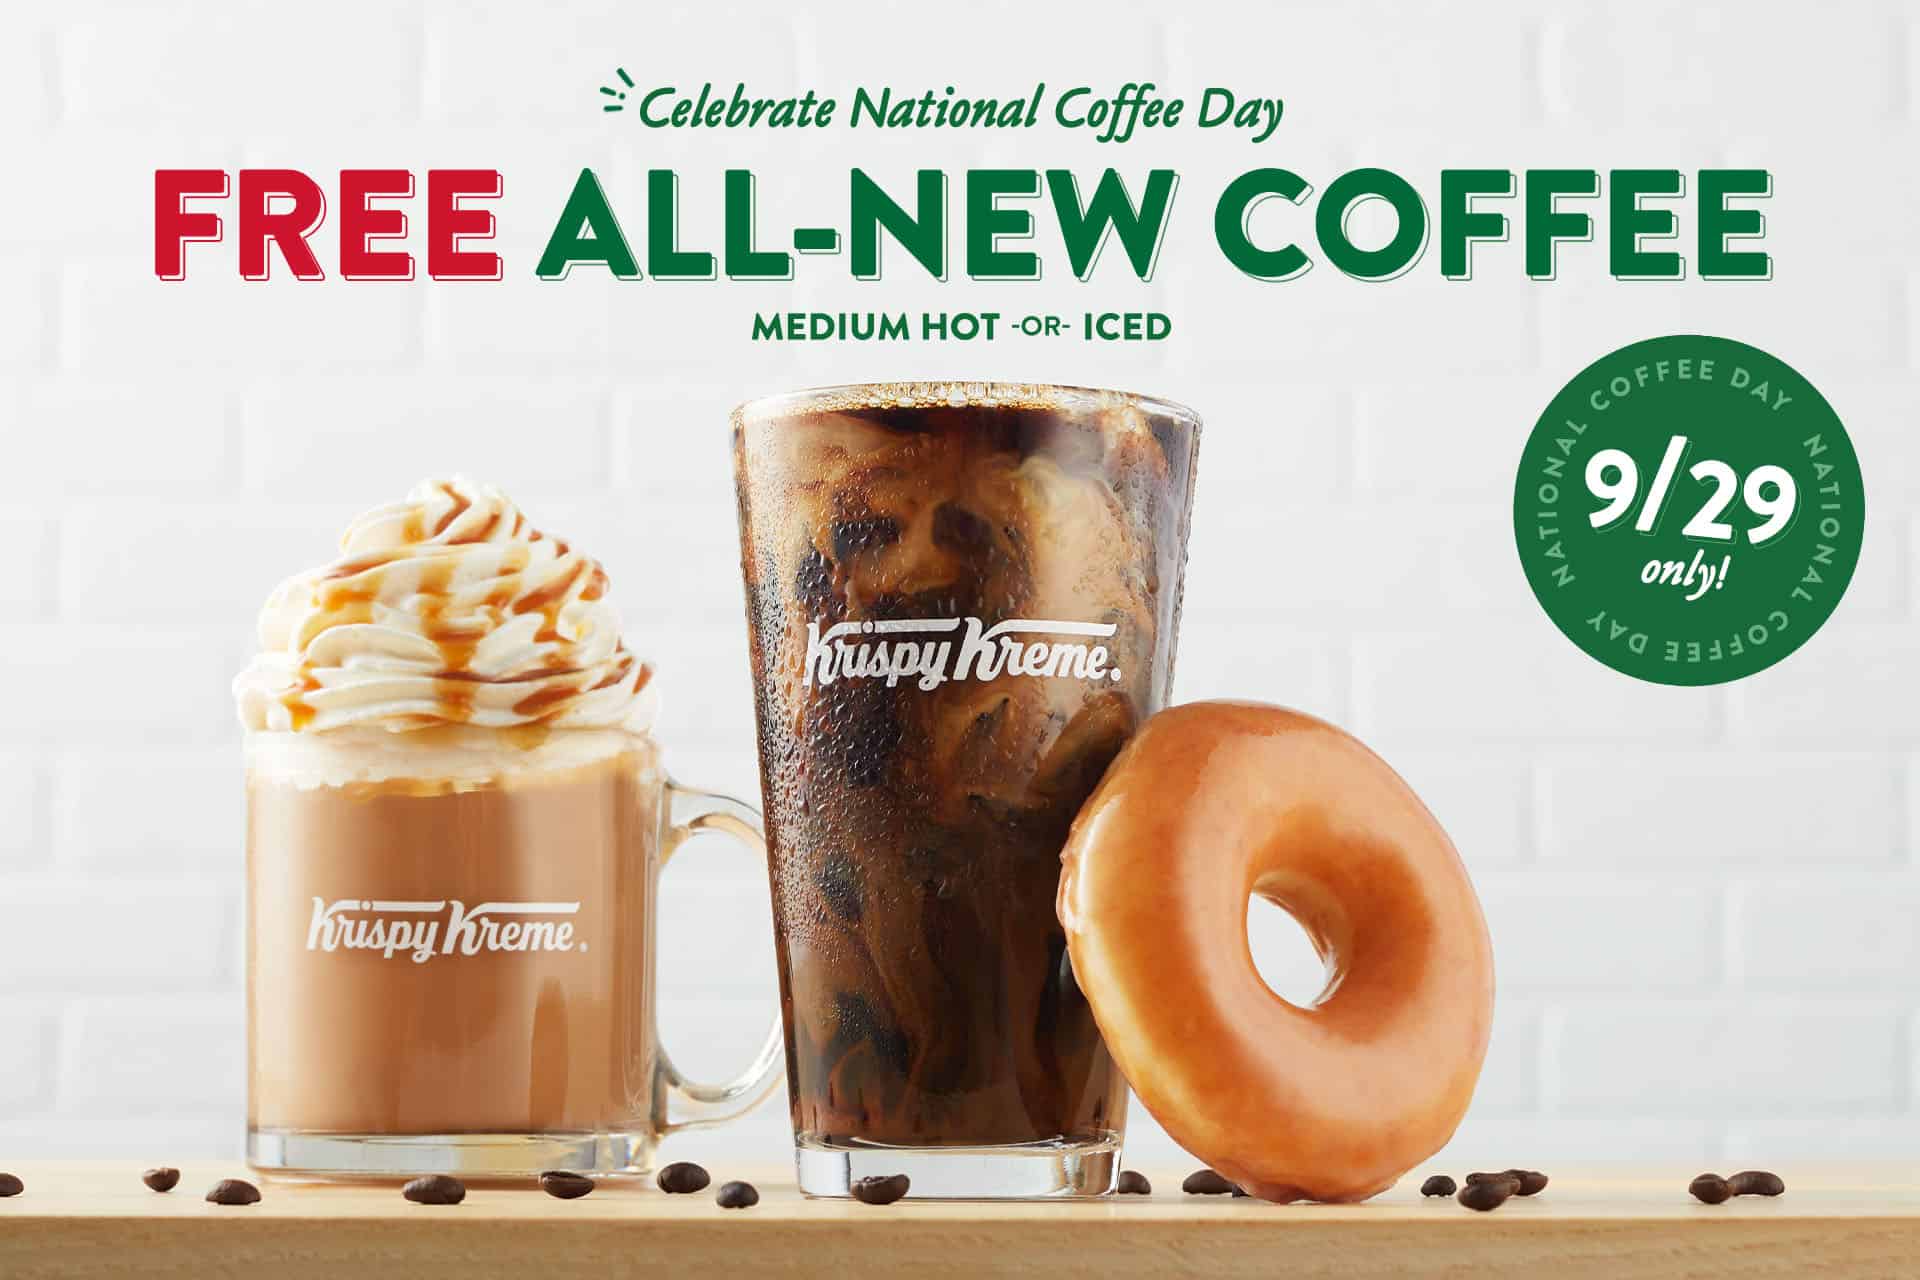 Krispy Kreme National Coffee Day deals